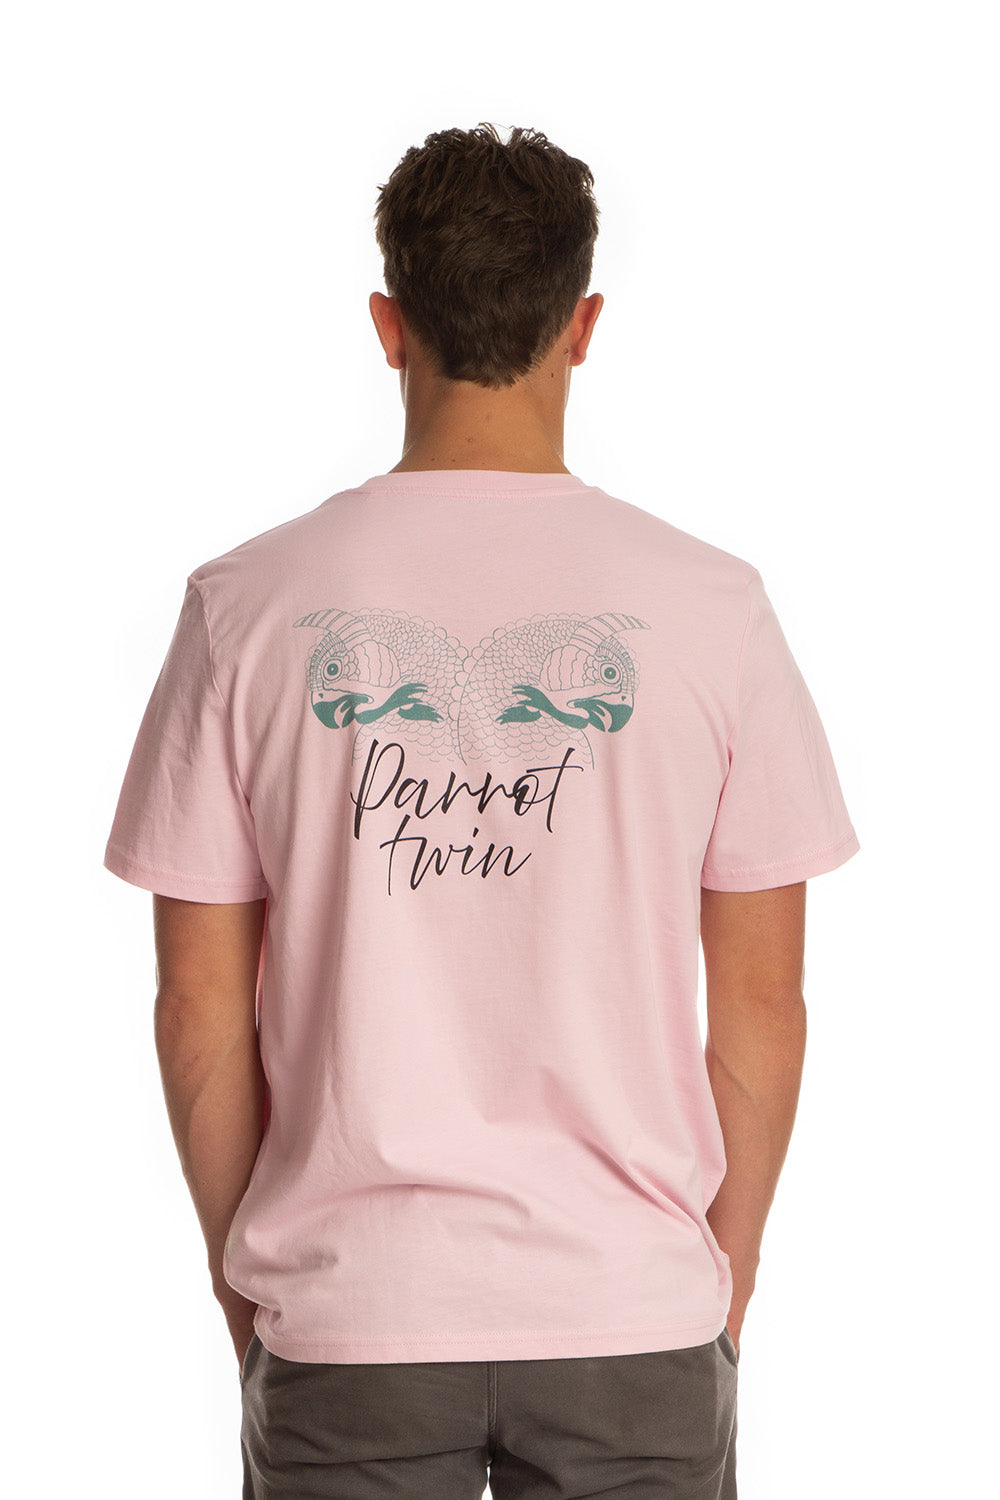 Tiki Twin Parrot Short Sleeve T-Shirt Pink